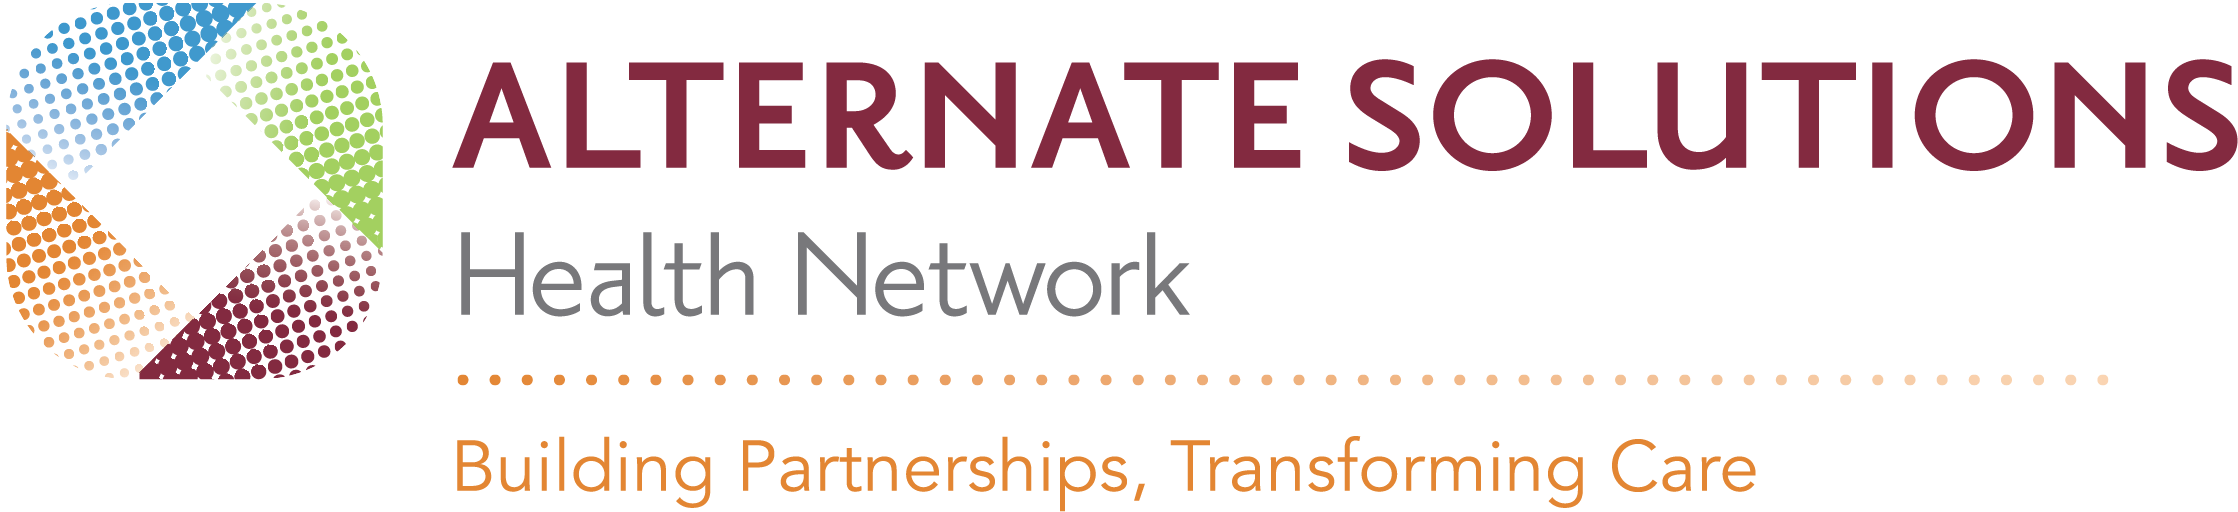 Alternate Solutions Health Network, LLC logo